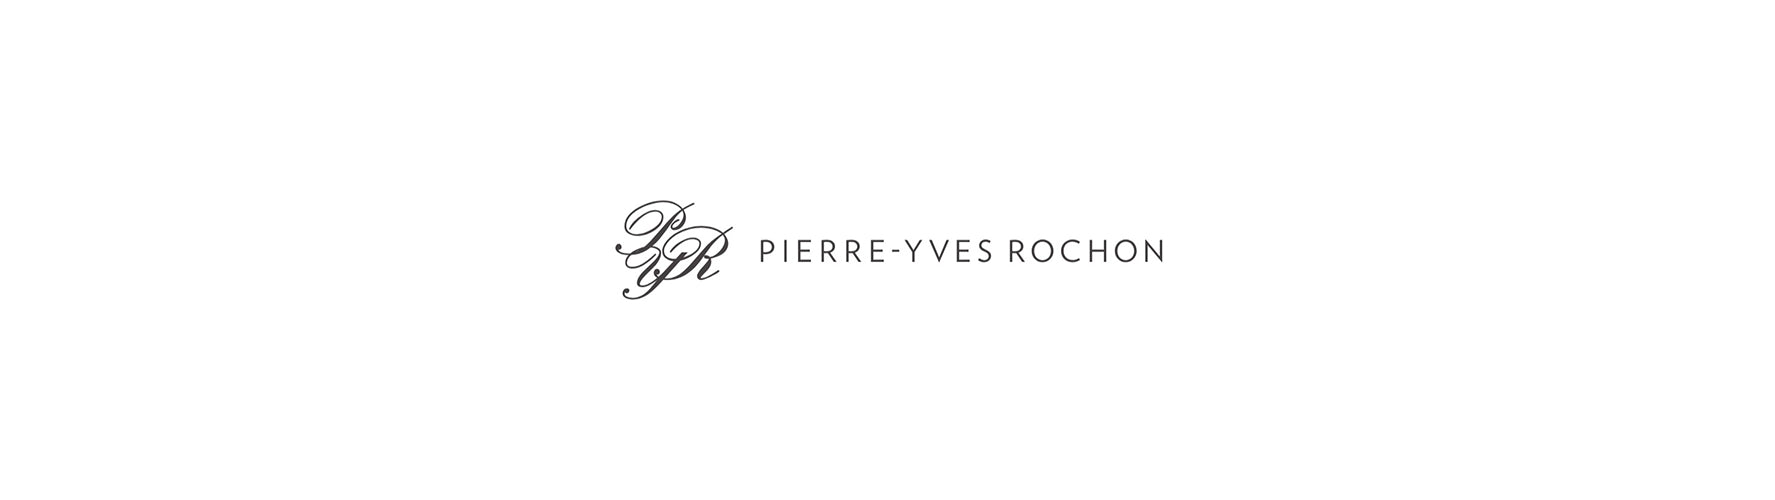 Pierre-Yves Rochon interior design logo.